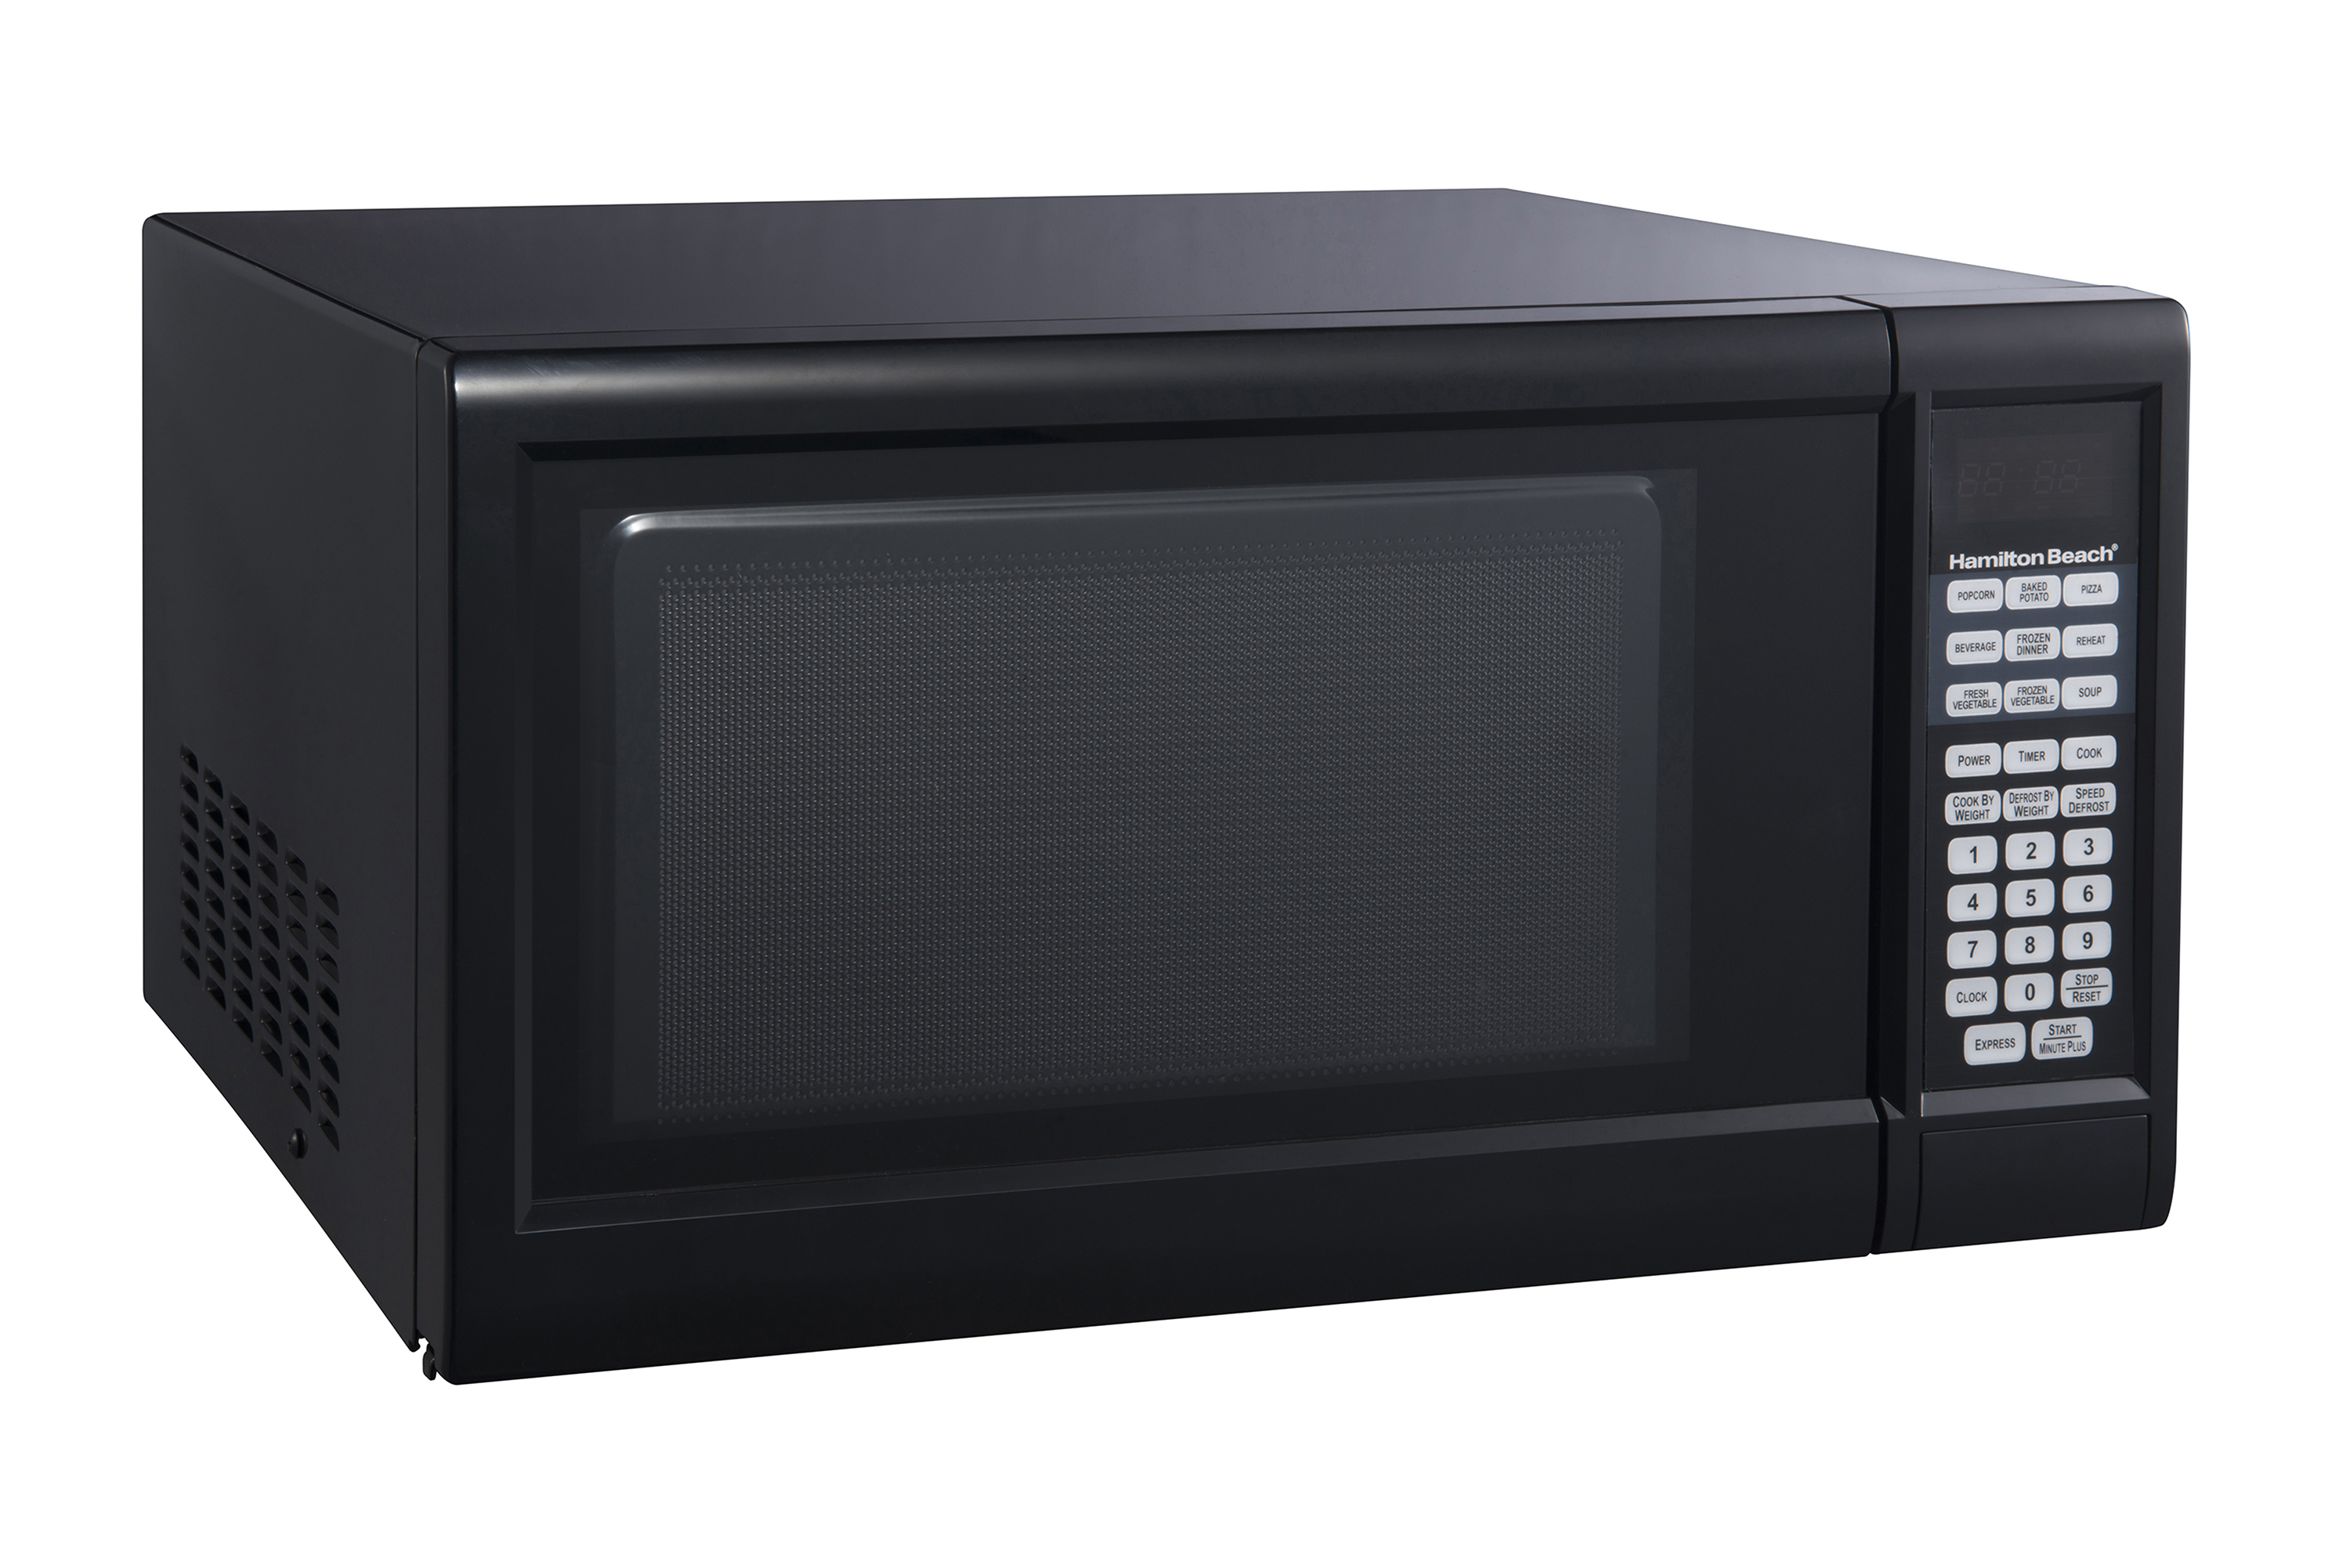 Hamilton Beach 1.3 Cu ft Digital Microwave Oven, Black - image 2 of 6